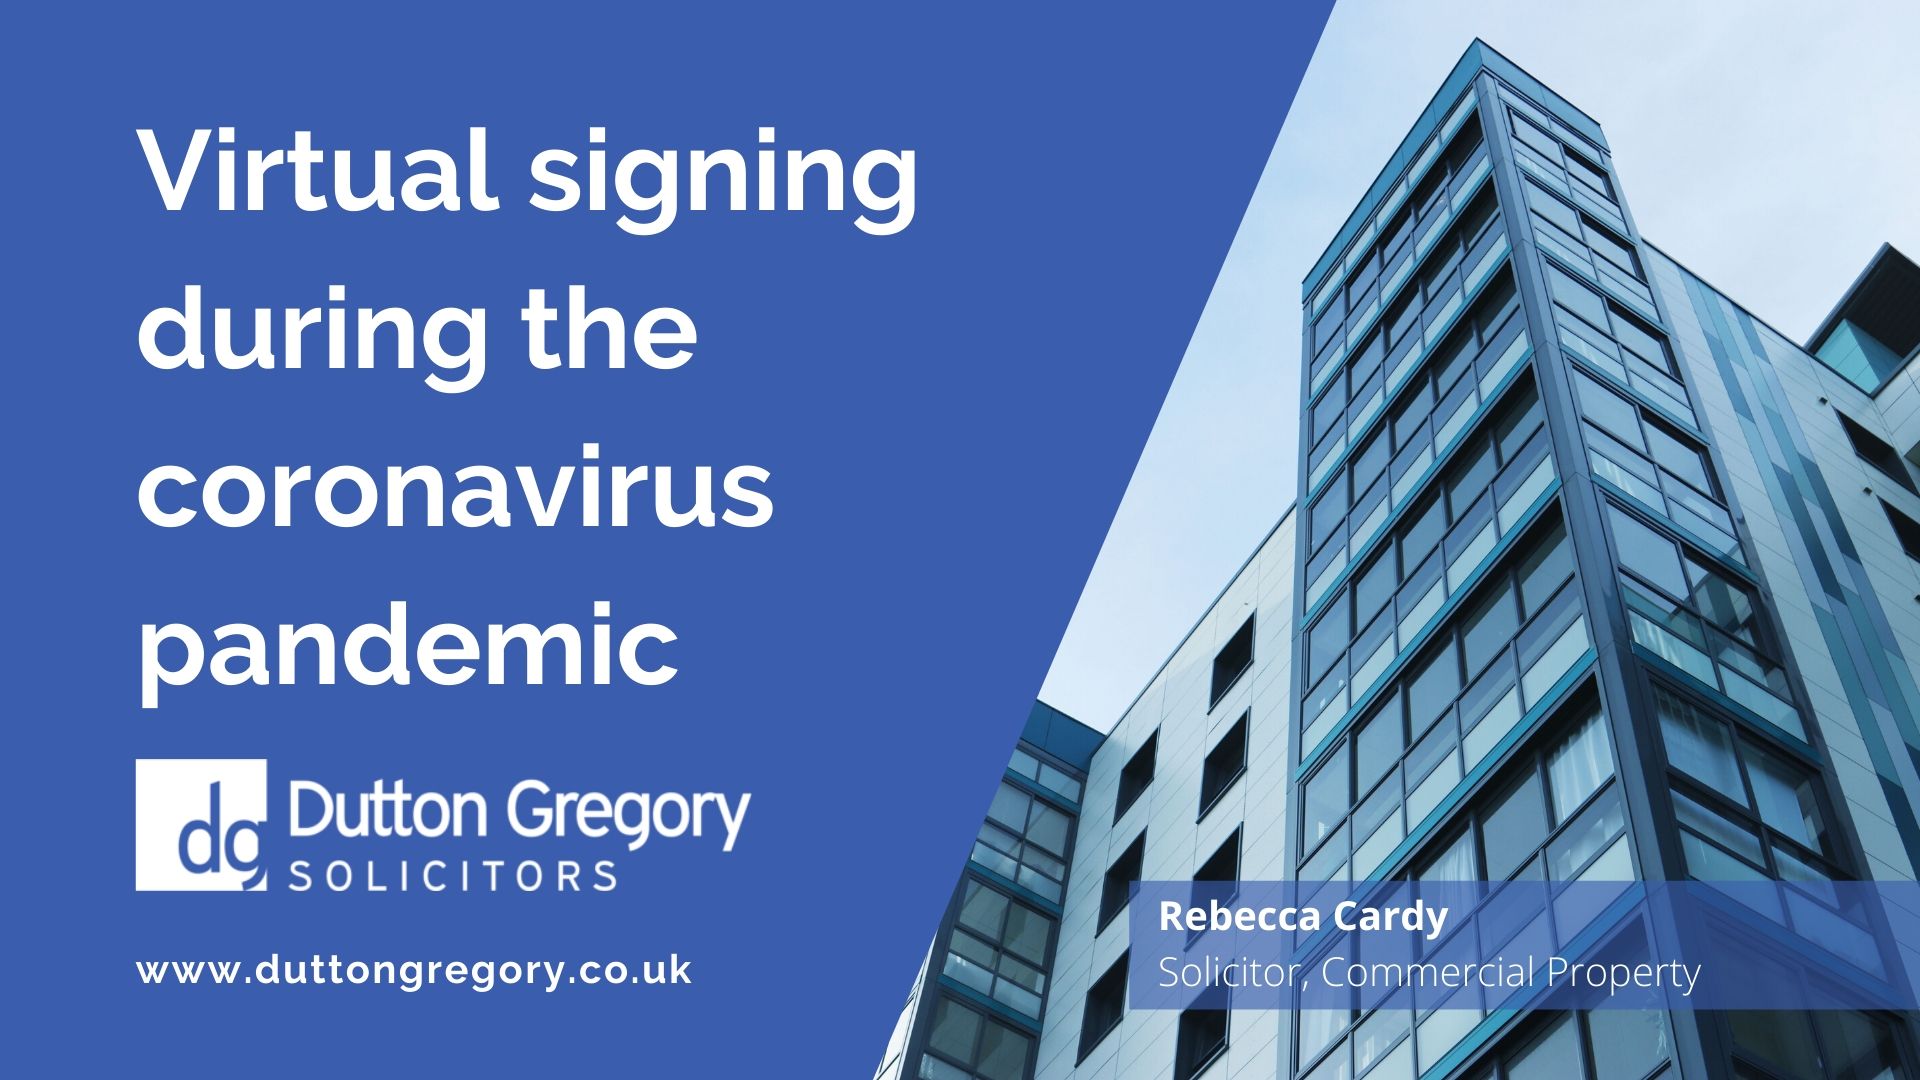 Virtual signing for property transactions during the coronavirus pandemic